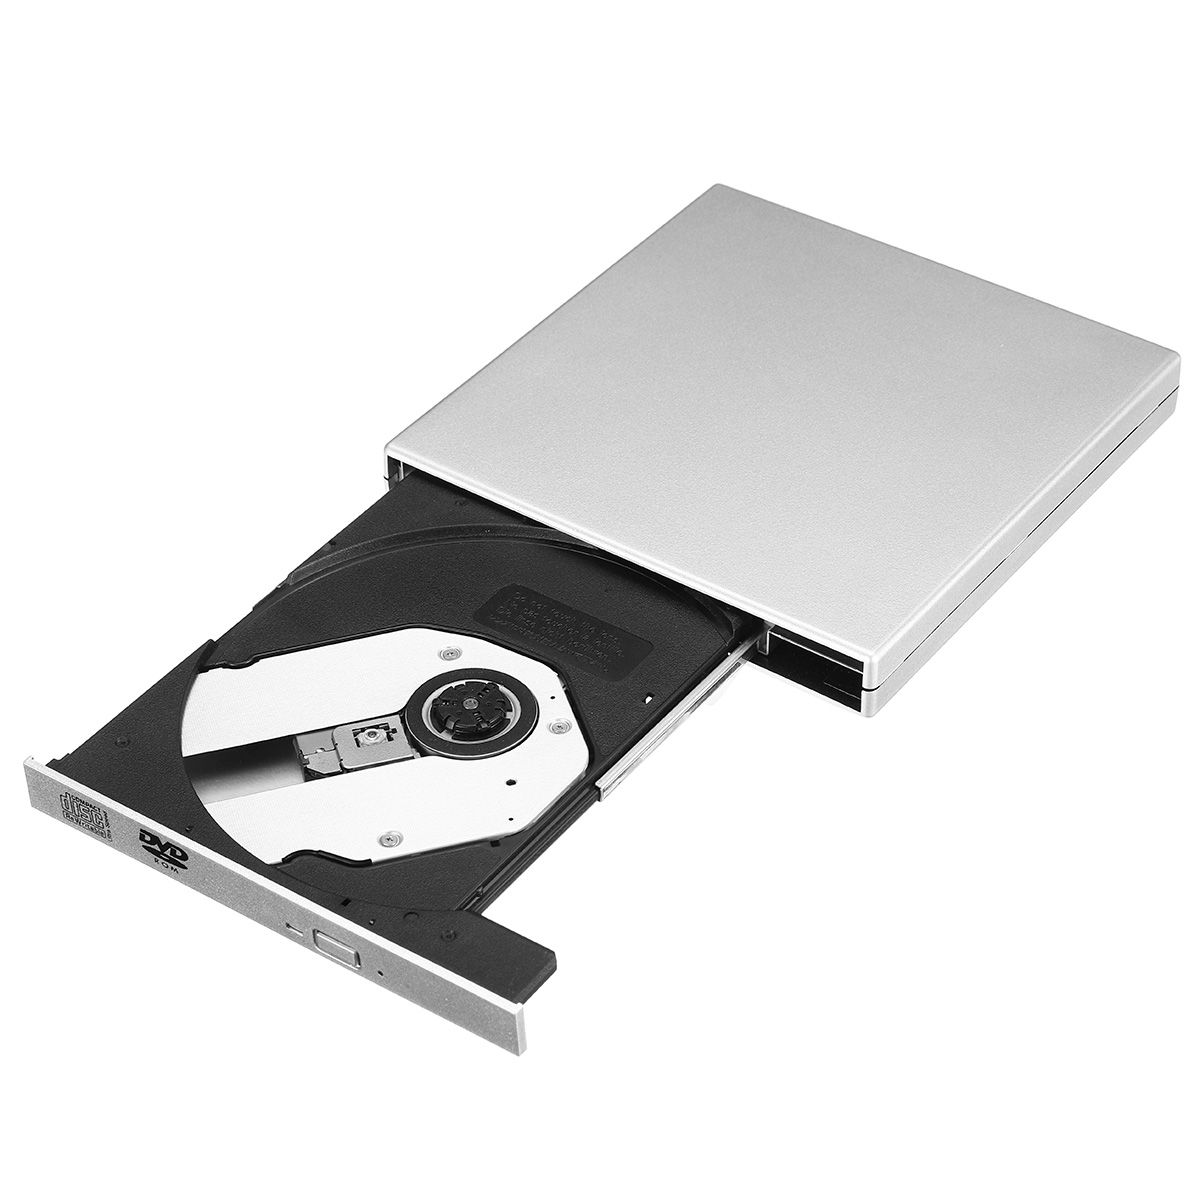 External-DVD-CD-Driver-CD-Write-USB-20-Plug-and-Play-1656776